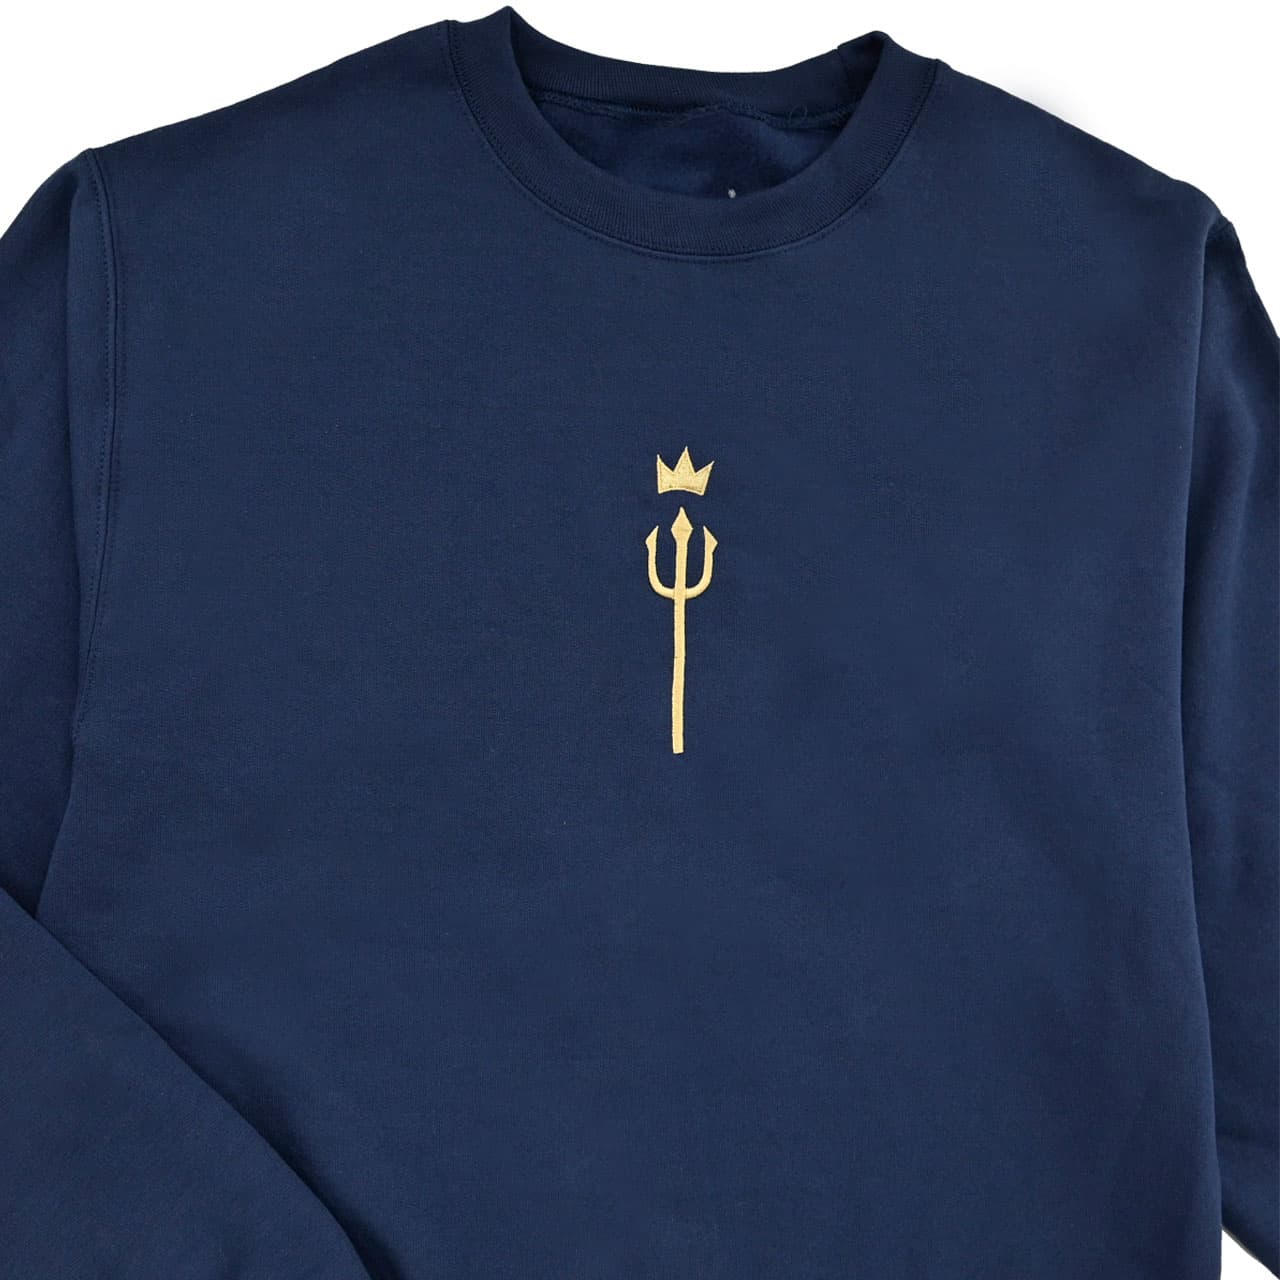 awesamdude King Trident Embroidered Crewneck Sweatshirt